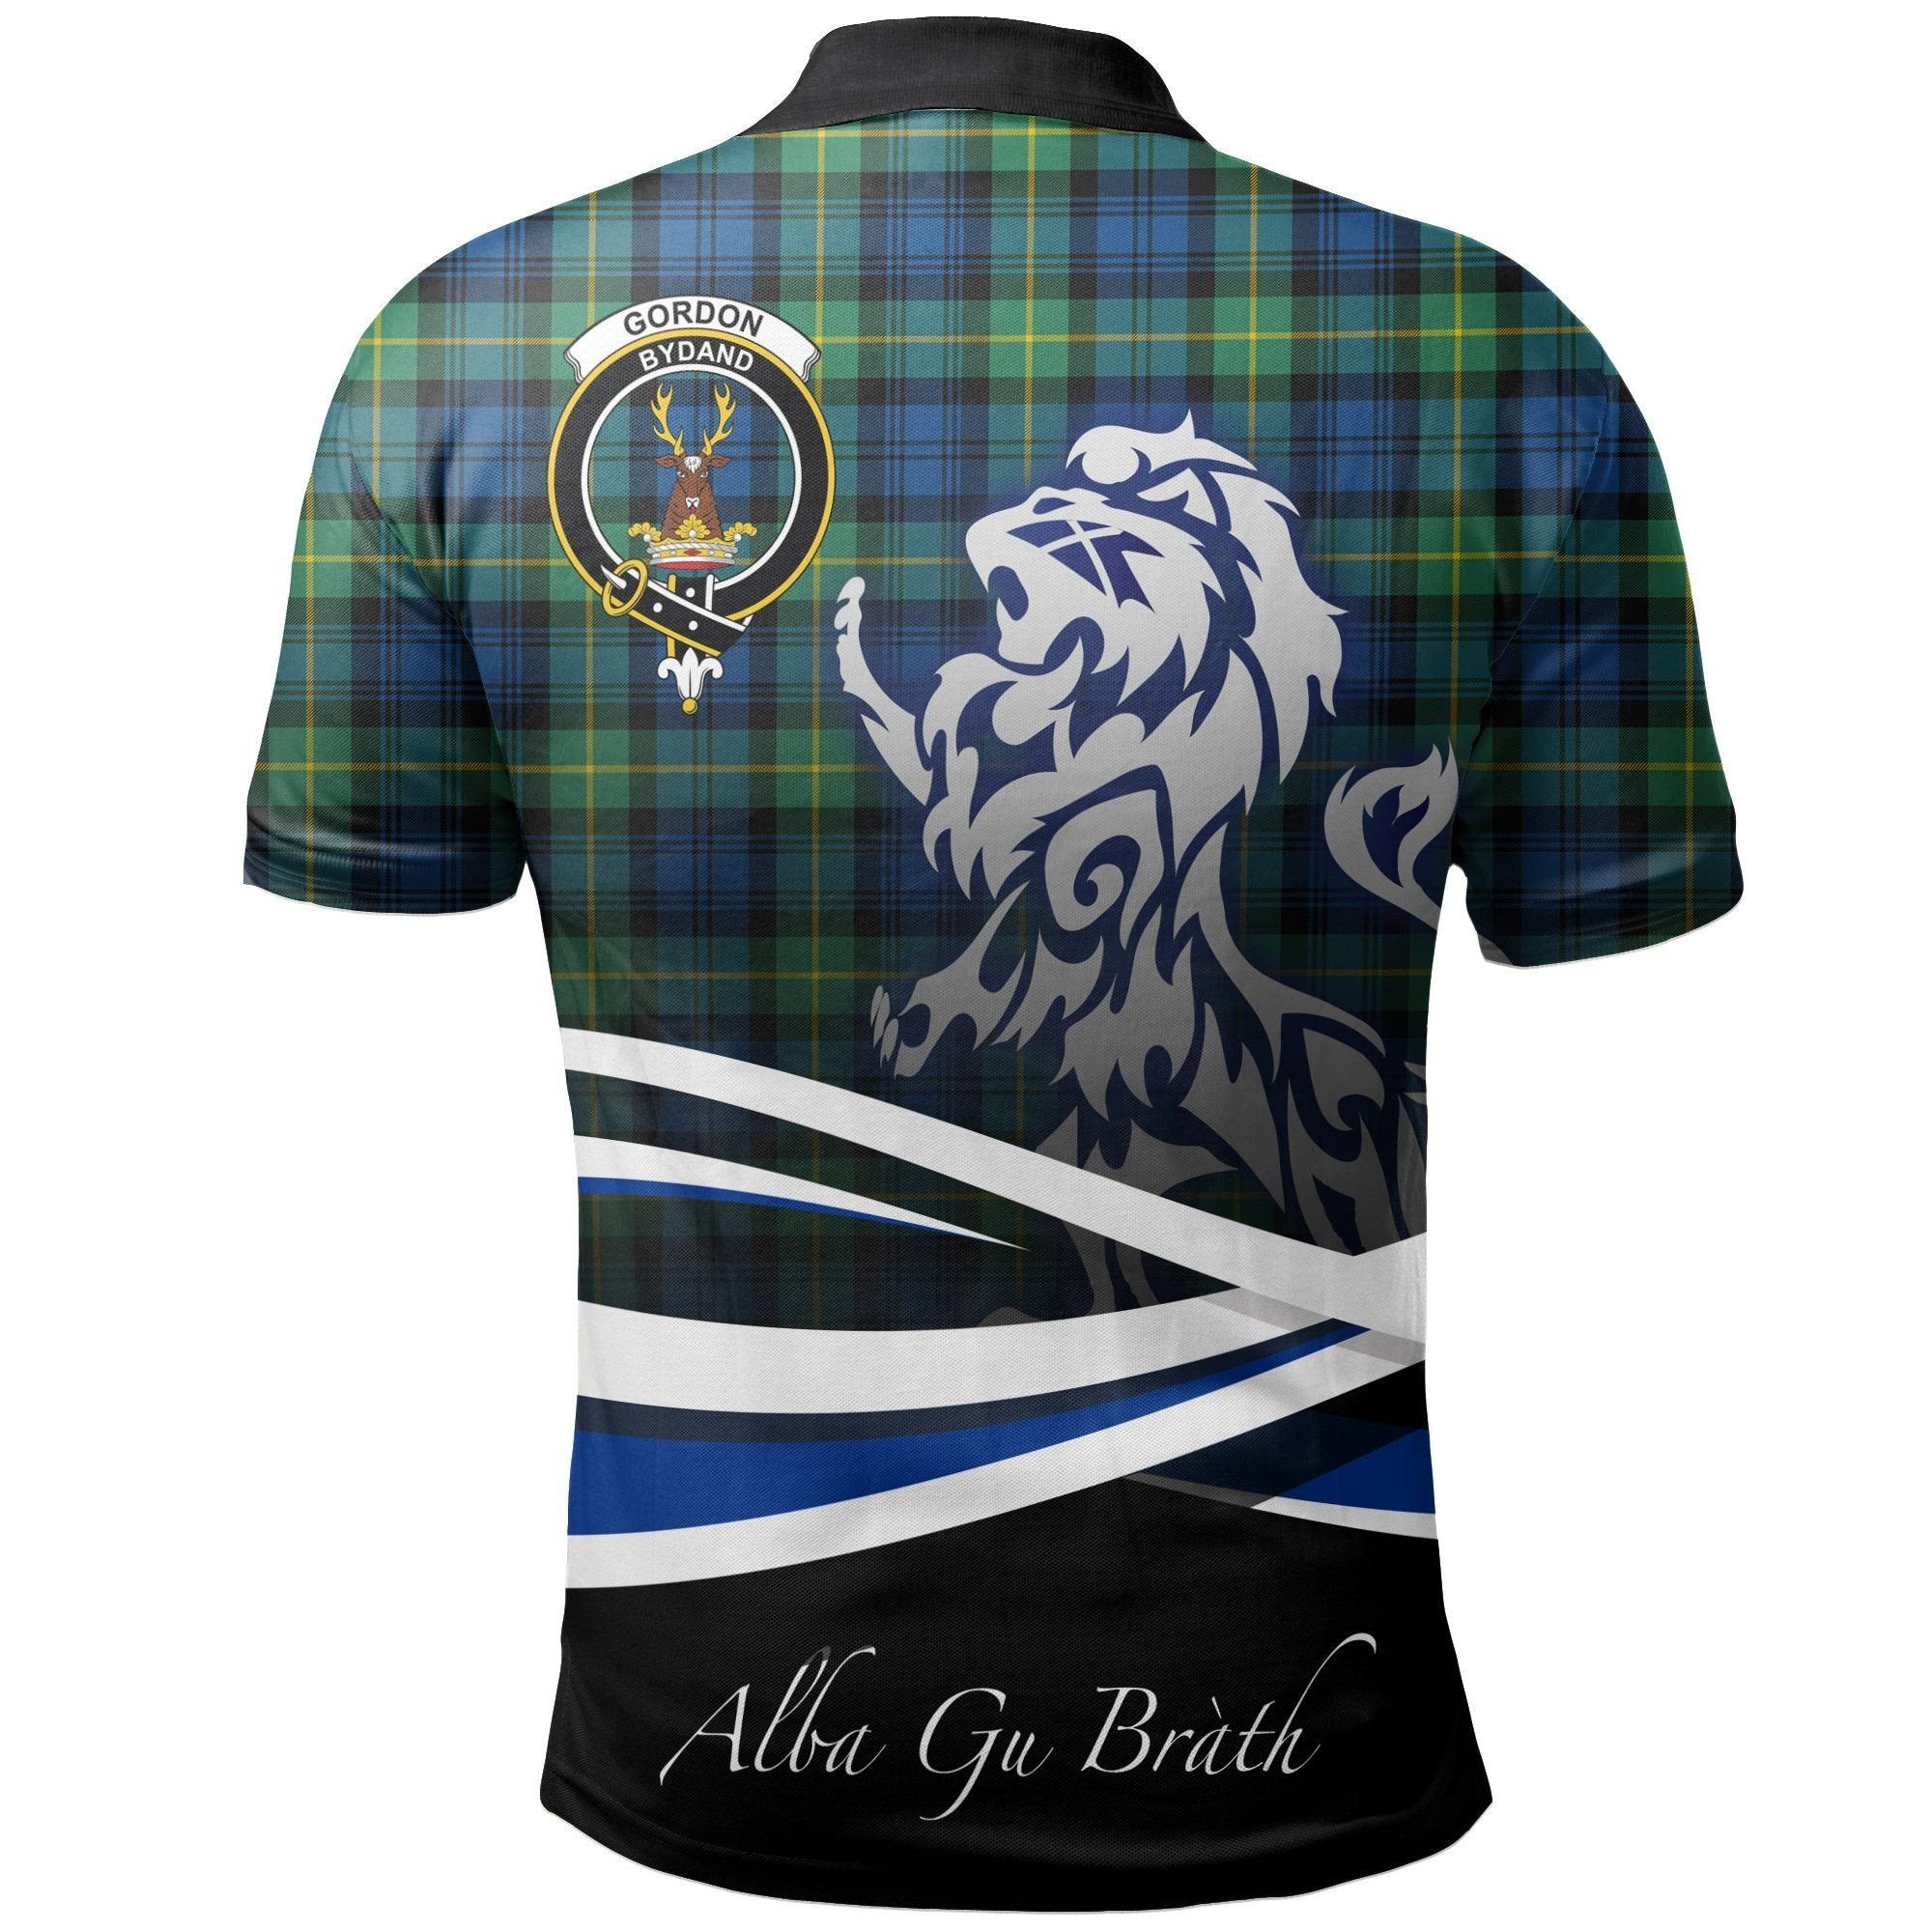 Gordon Ancient Clan Polo Shirt, Scottish Tartan Gordon Ancient Clans Polo Shirt Crest Lion Style